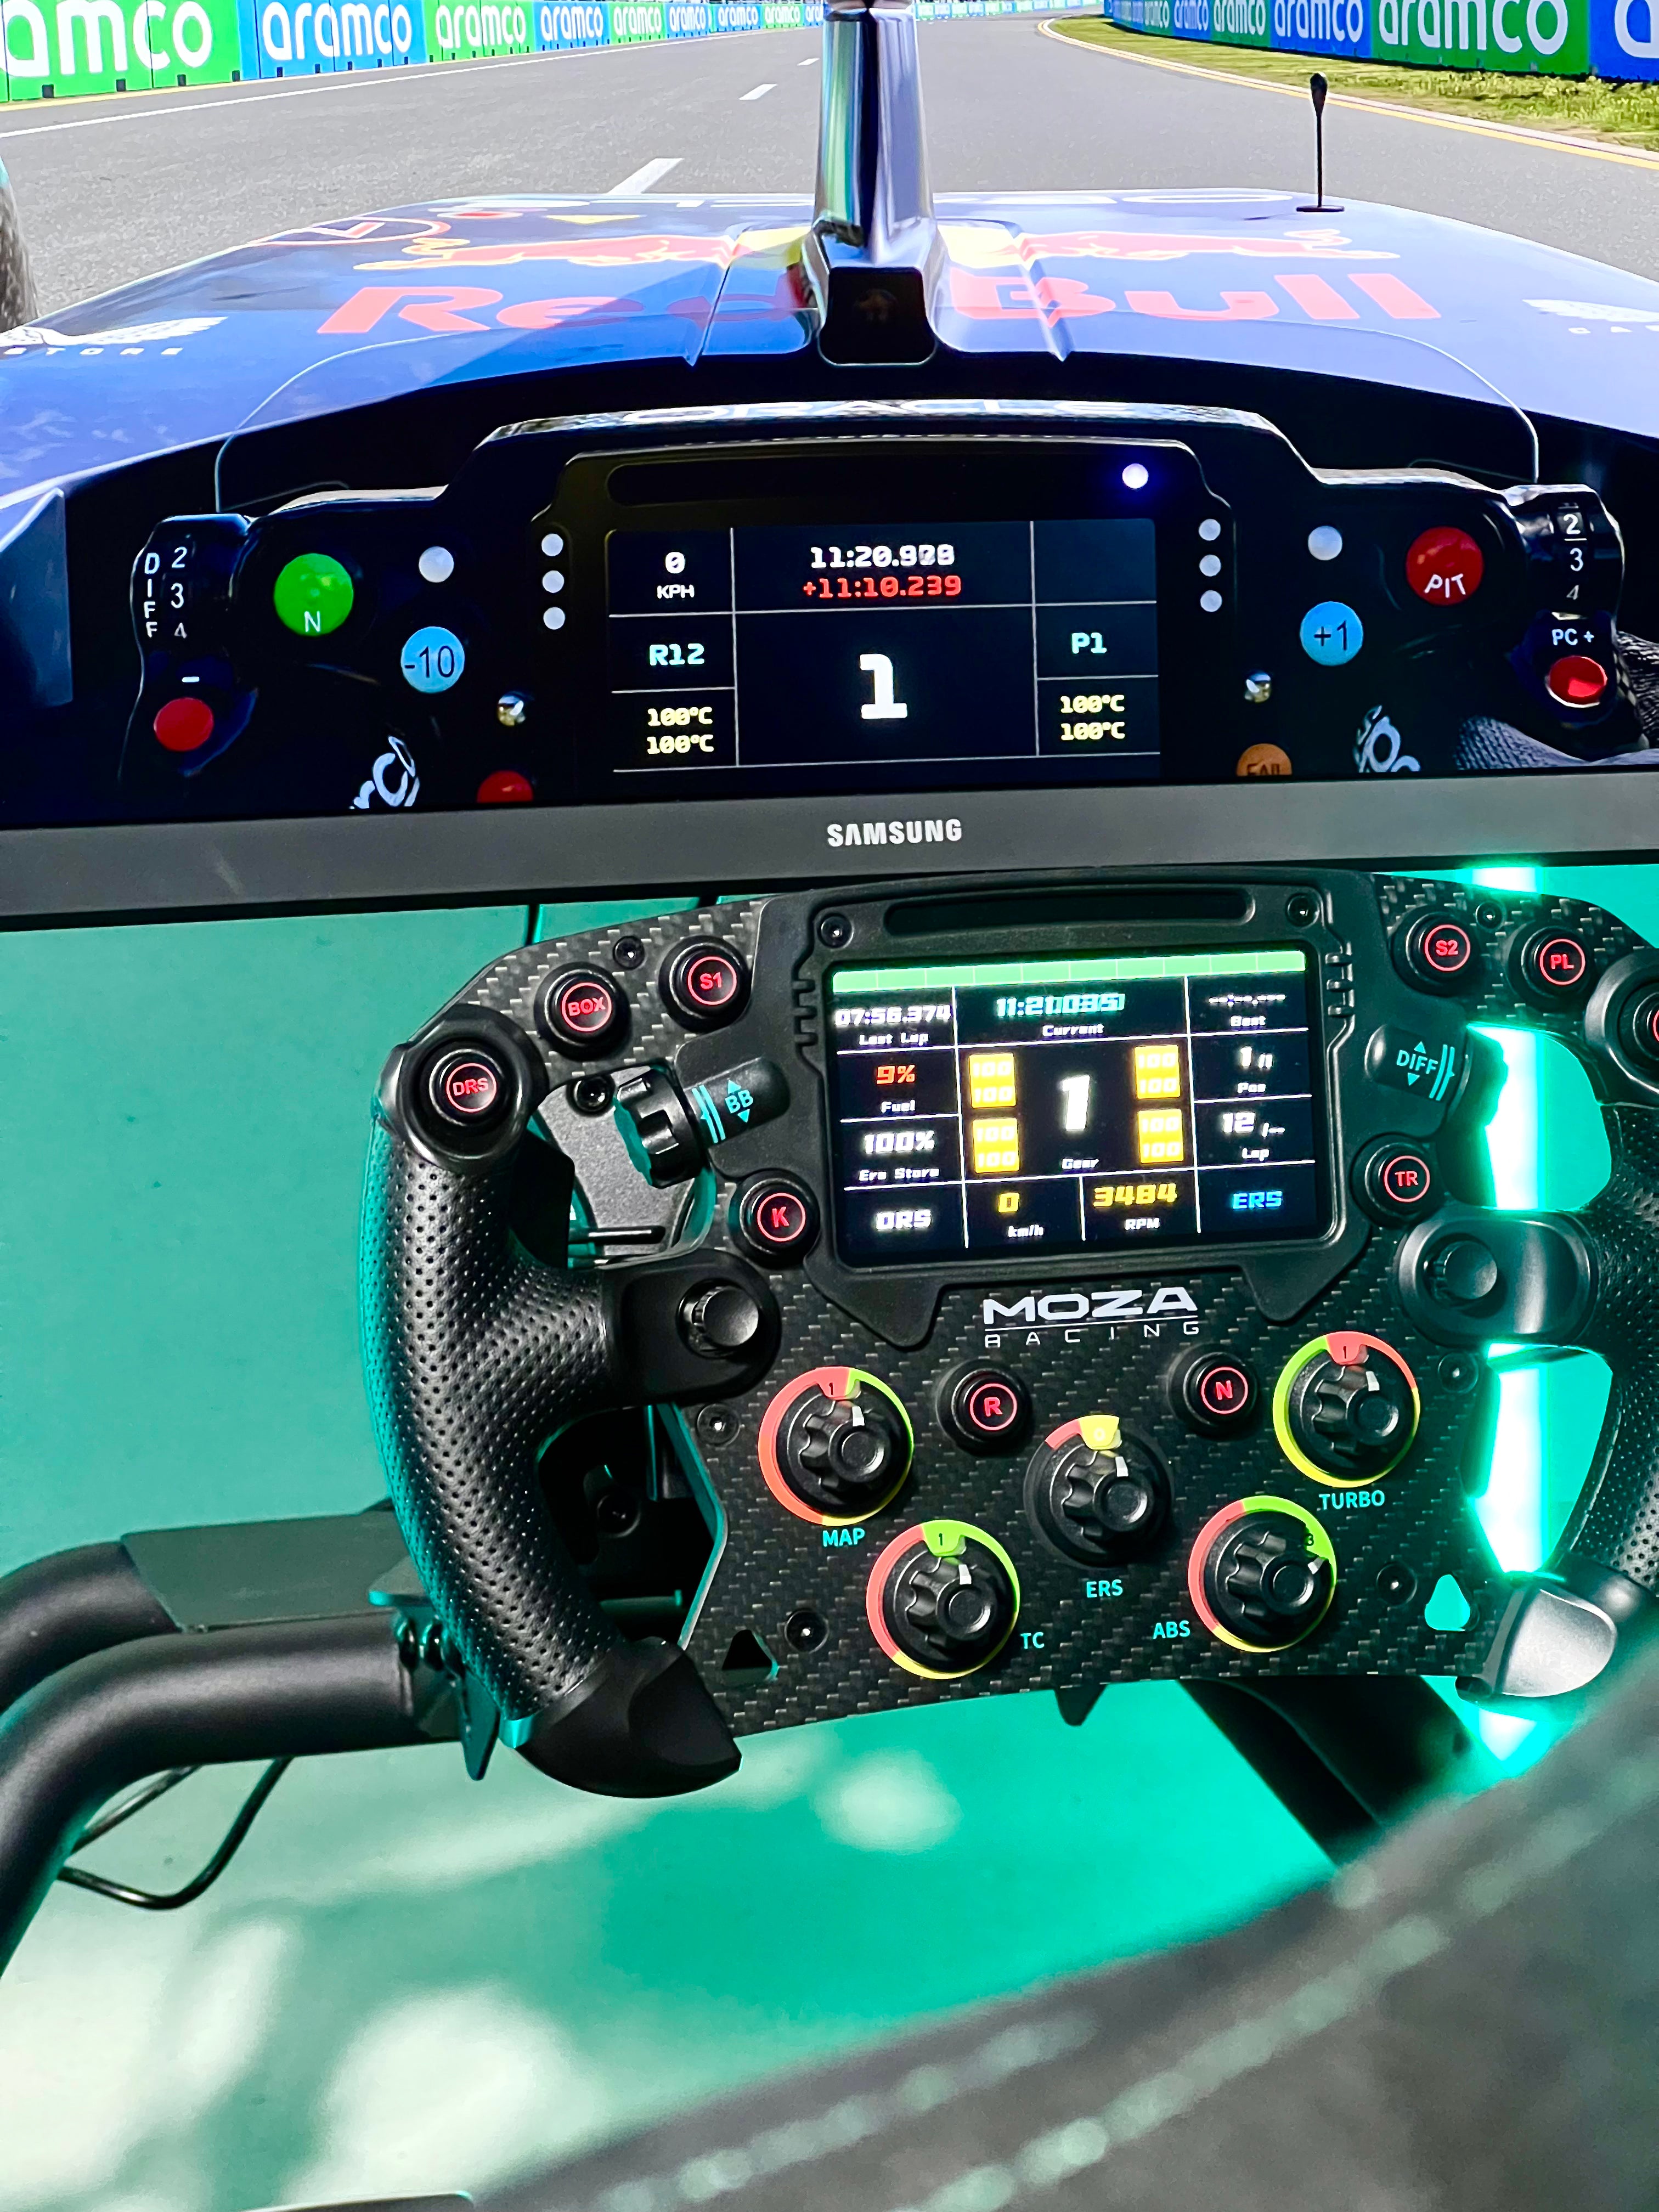 SGS S1 Complete Racing Simulator